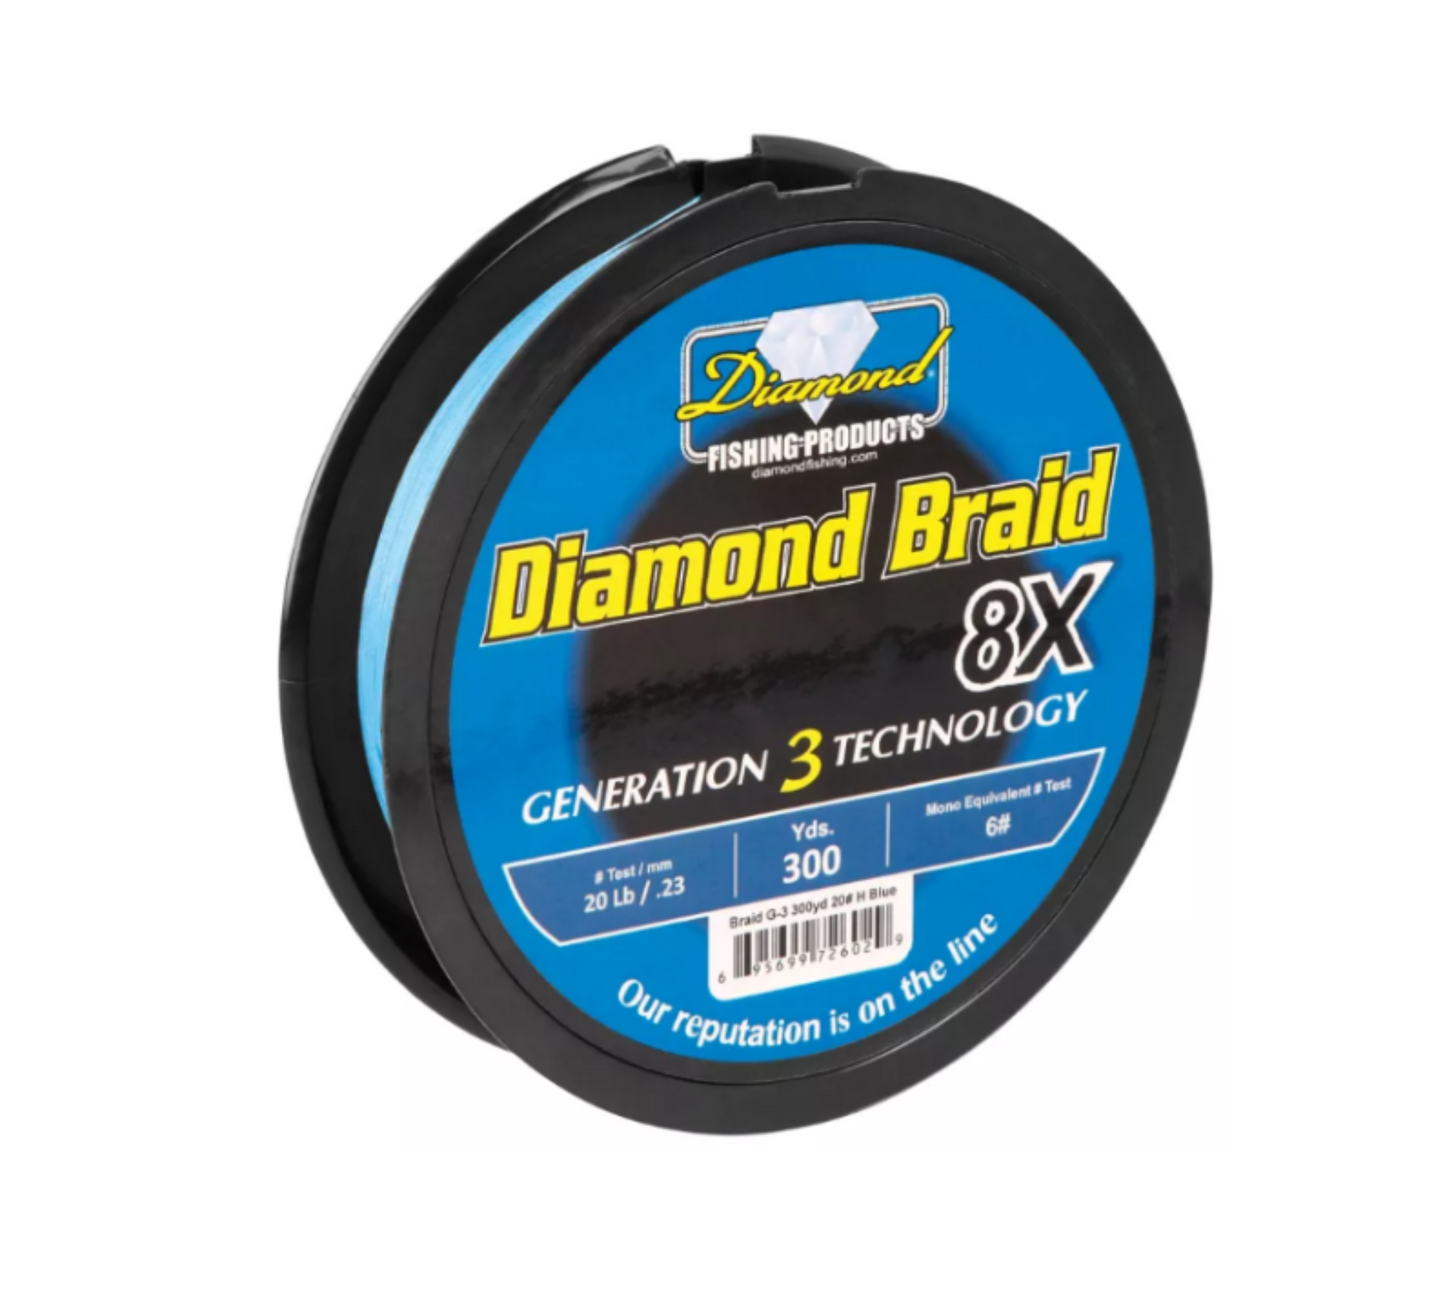 Diamond Generation 3 Diamond Braid 8X Fishing Line